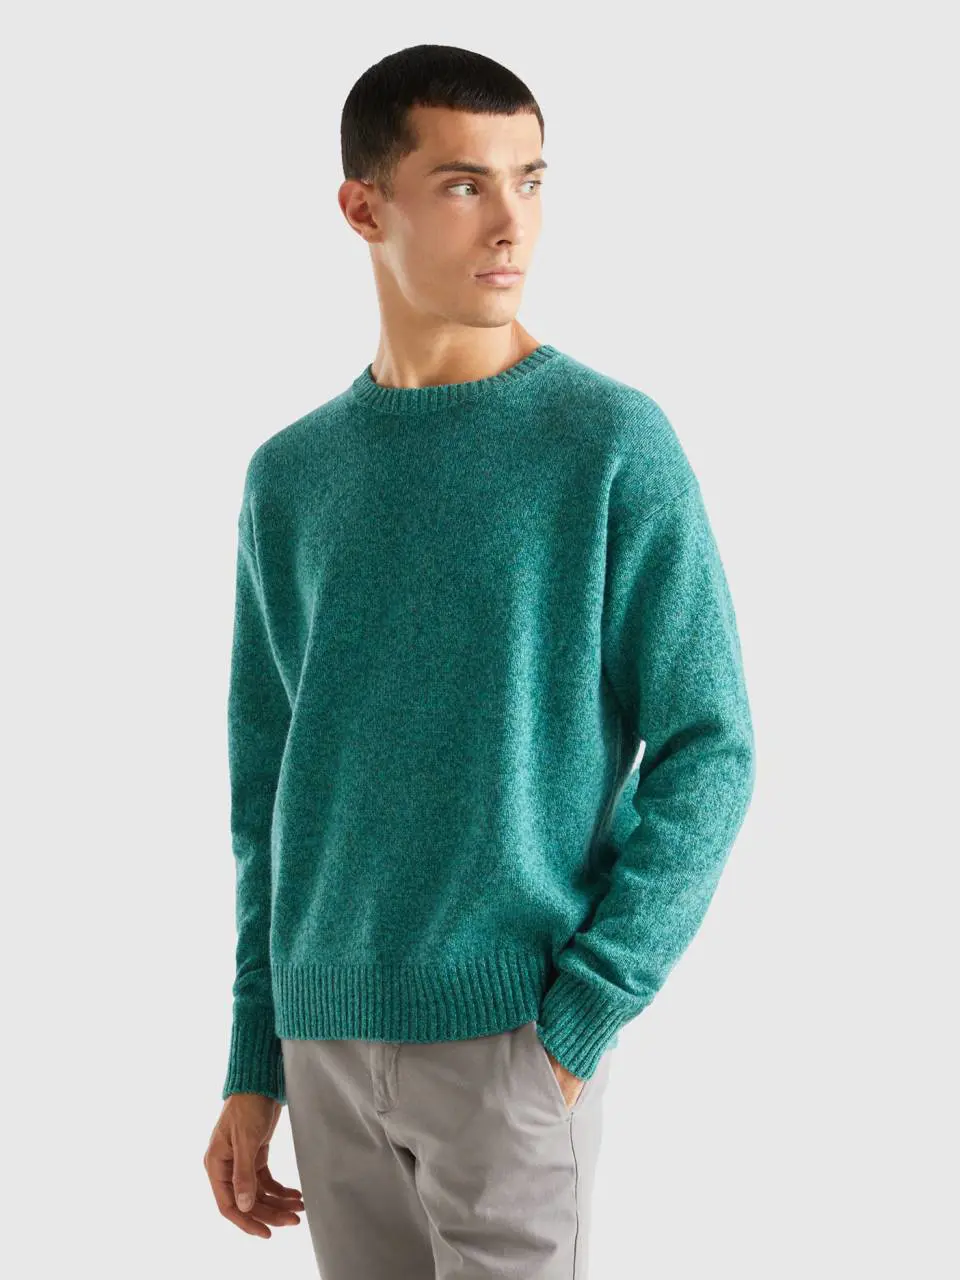 Benetton crew neck sweater in pure shetland wool. 1